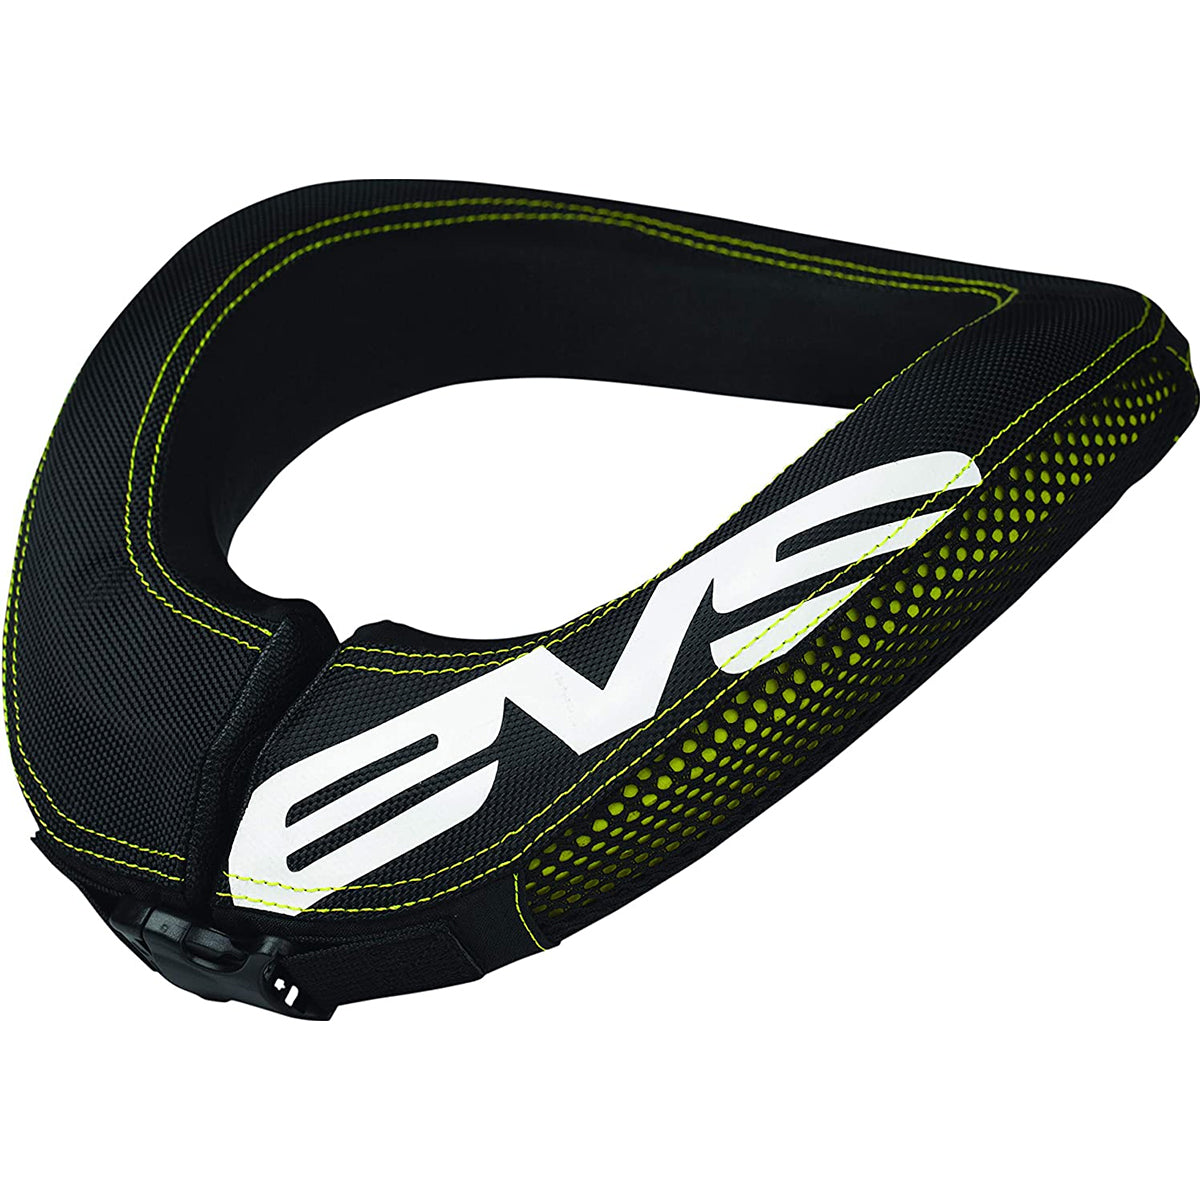 EVS Sports SB03 Shoulder Brace Black Small New in Box